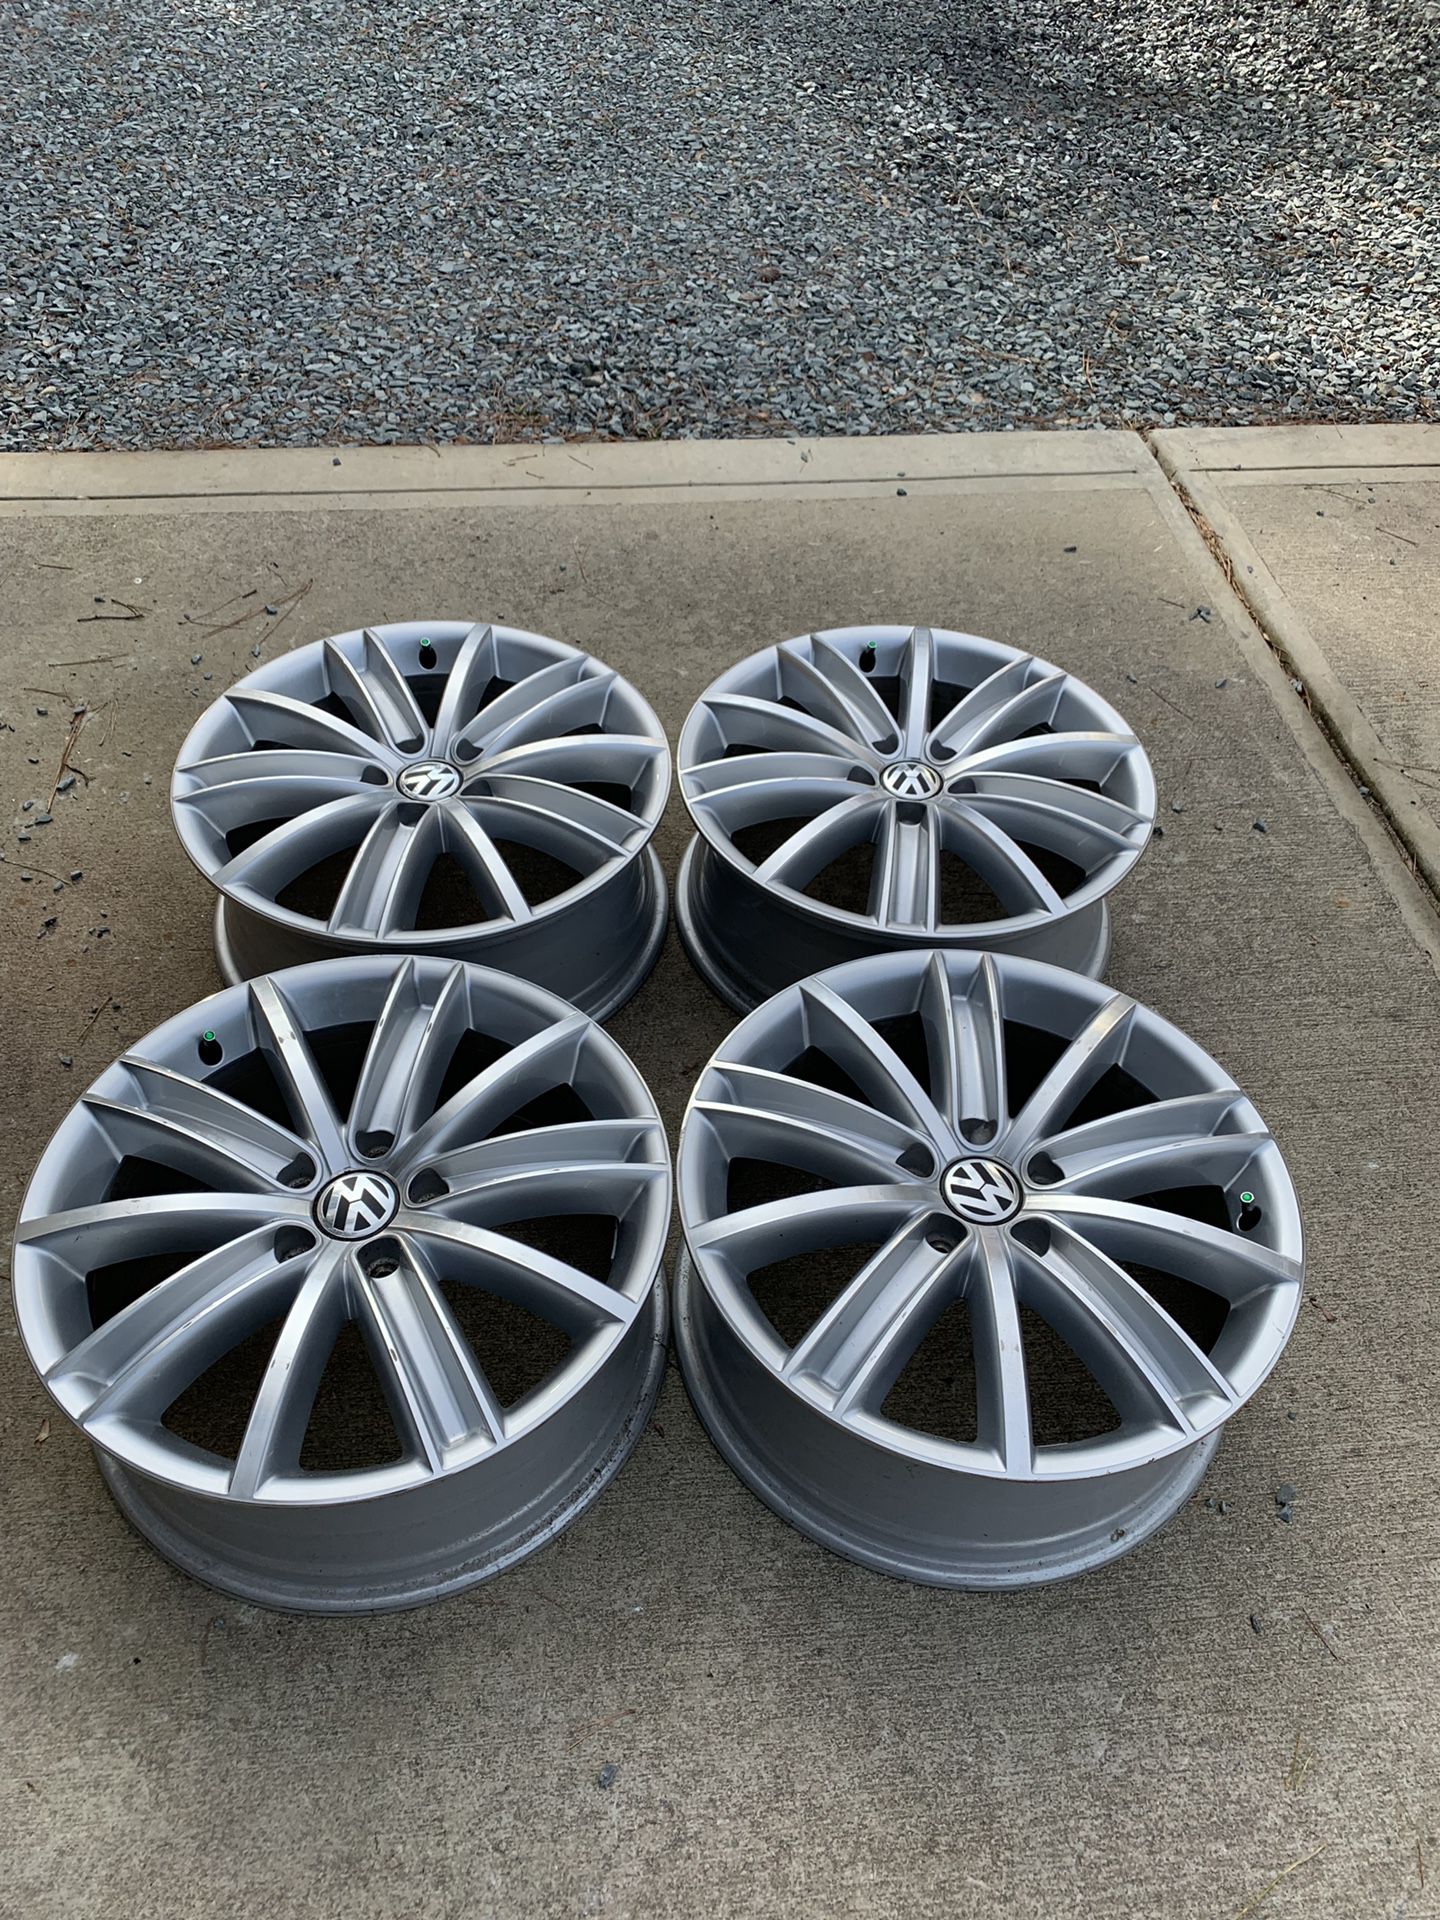 Original Volkswagen car wheels rims set of 4 (size 18, offset 43) MAKE OFFERS